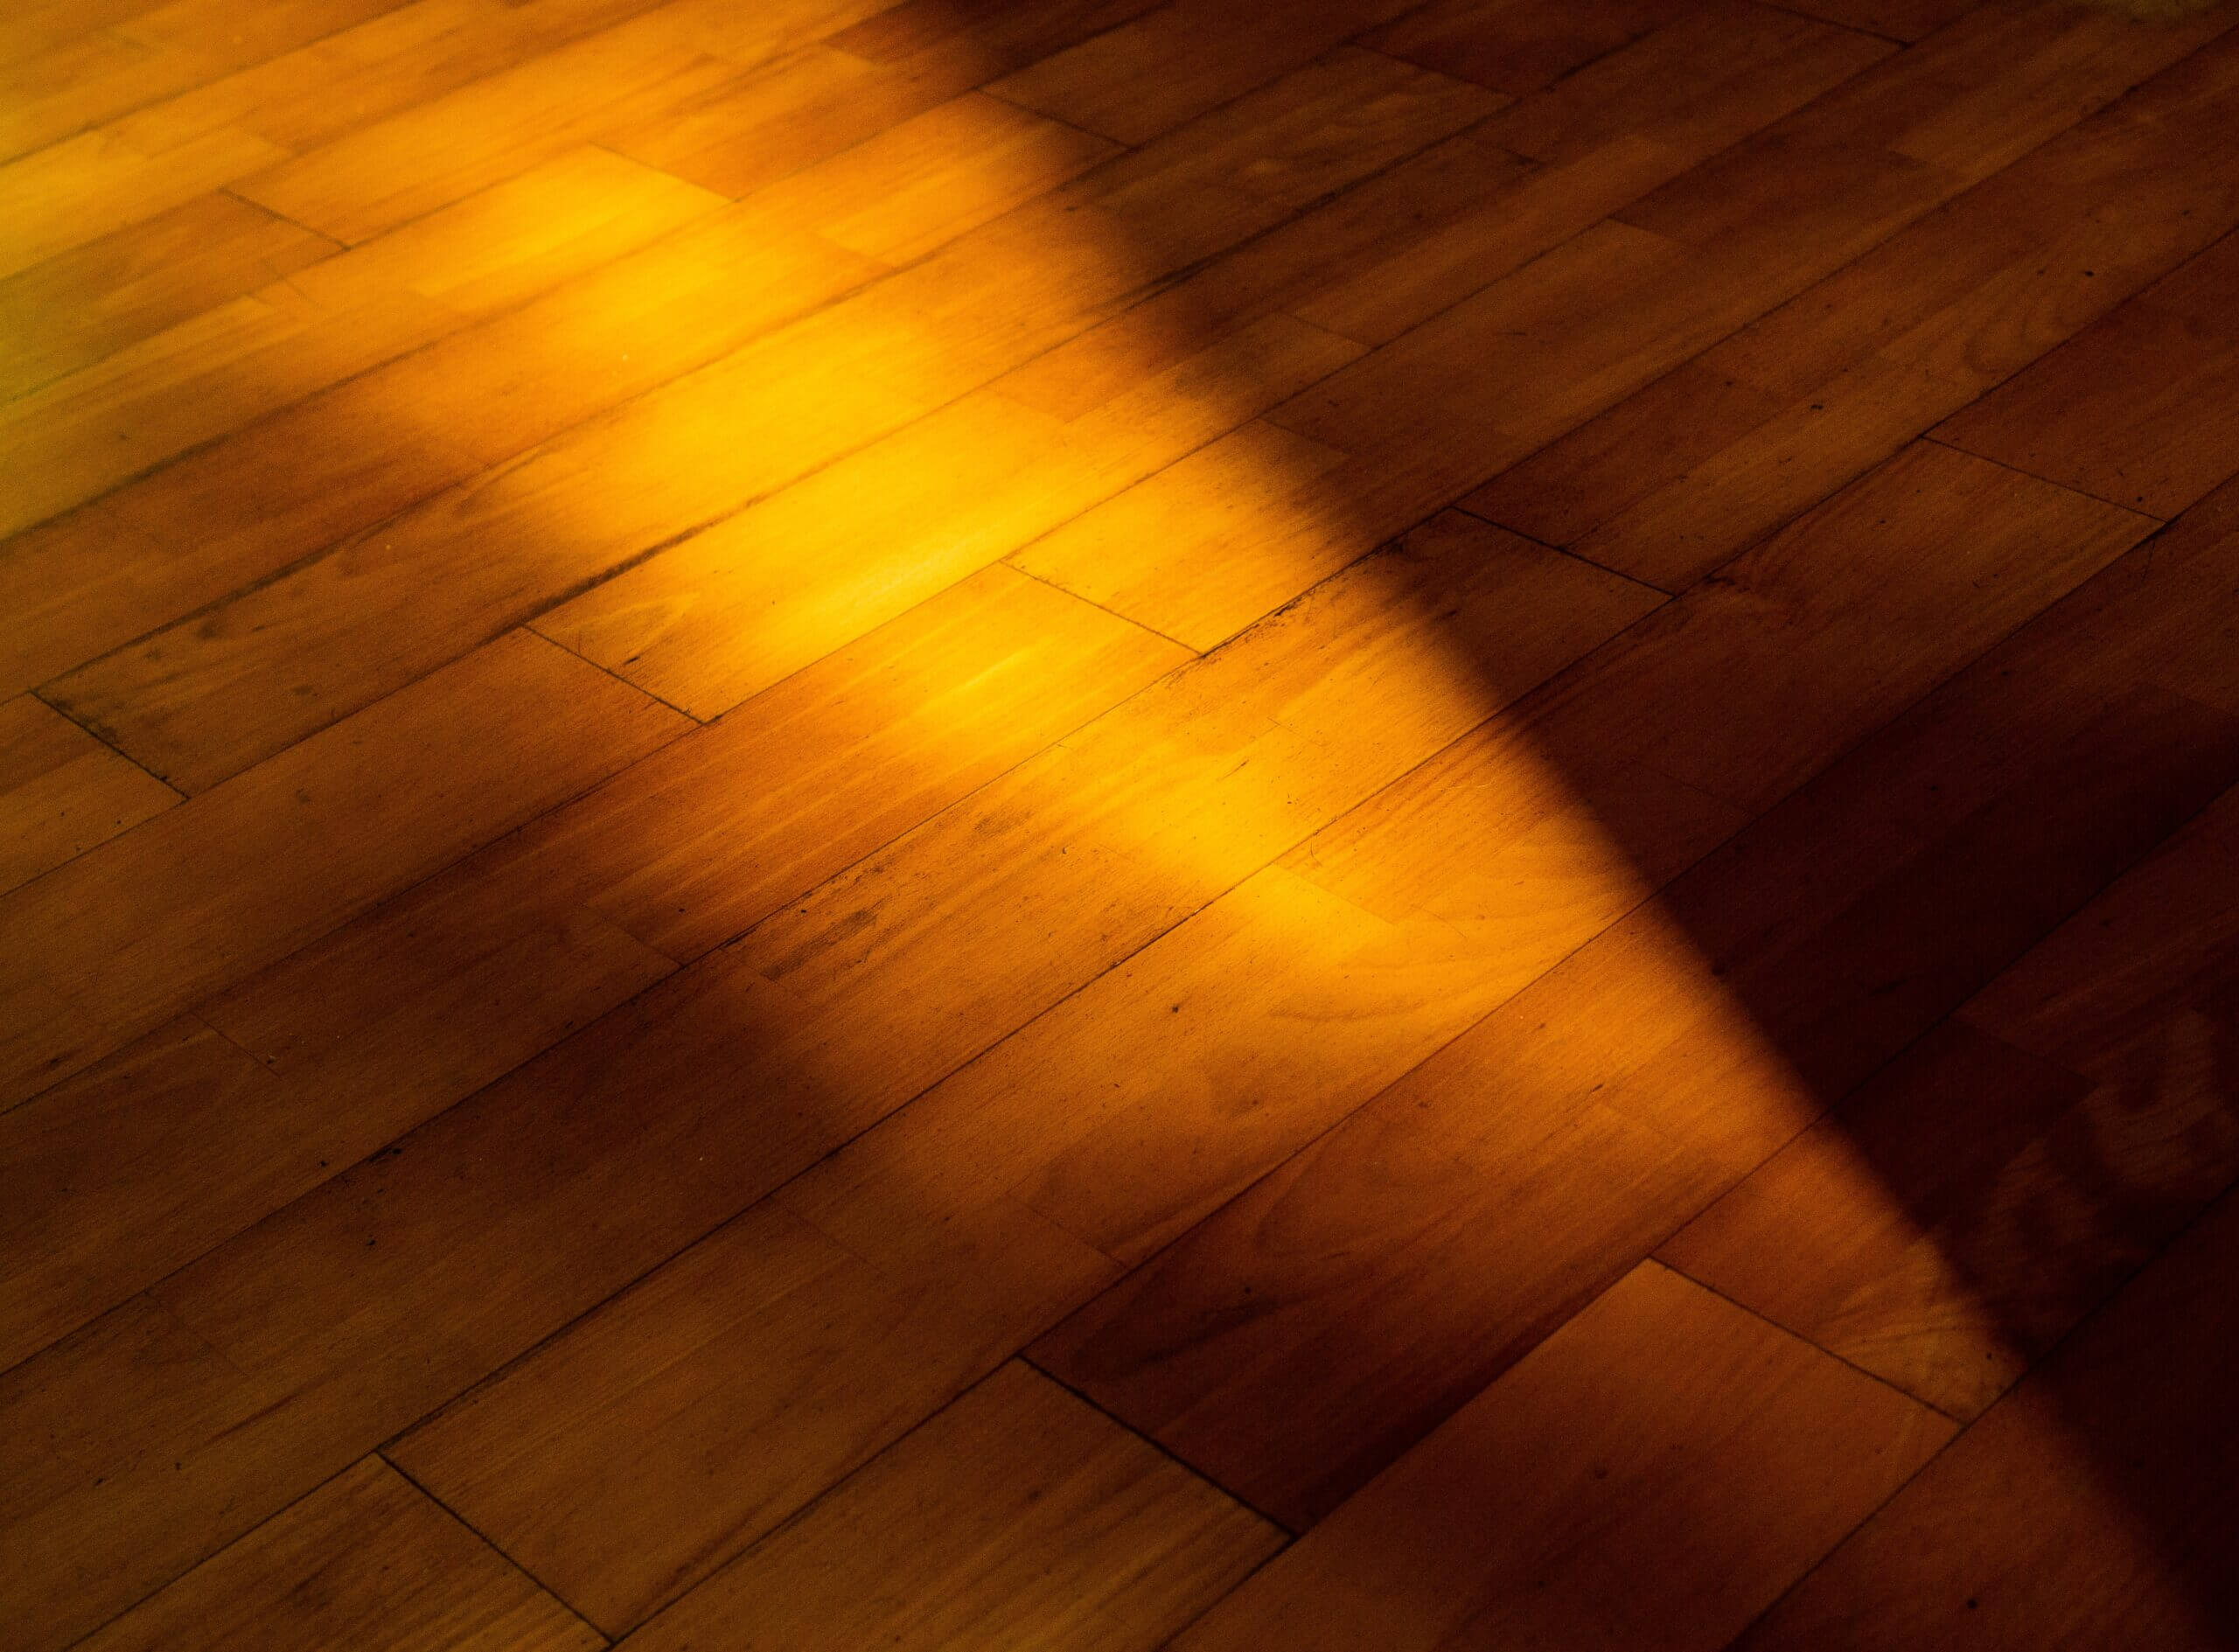 An image of a hardwood floor.